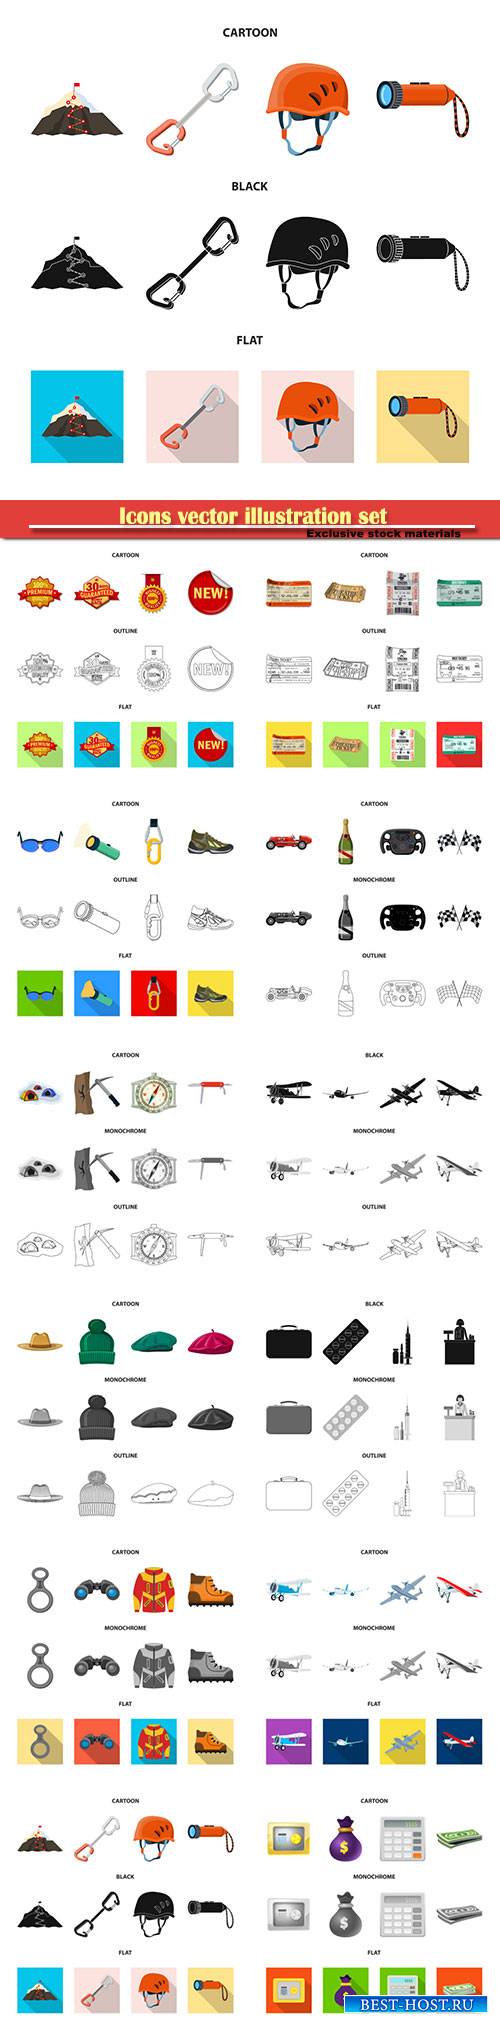 Icons vector illustration set # 10